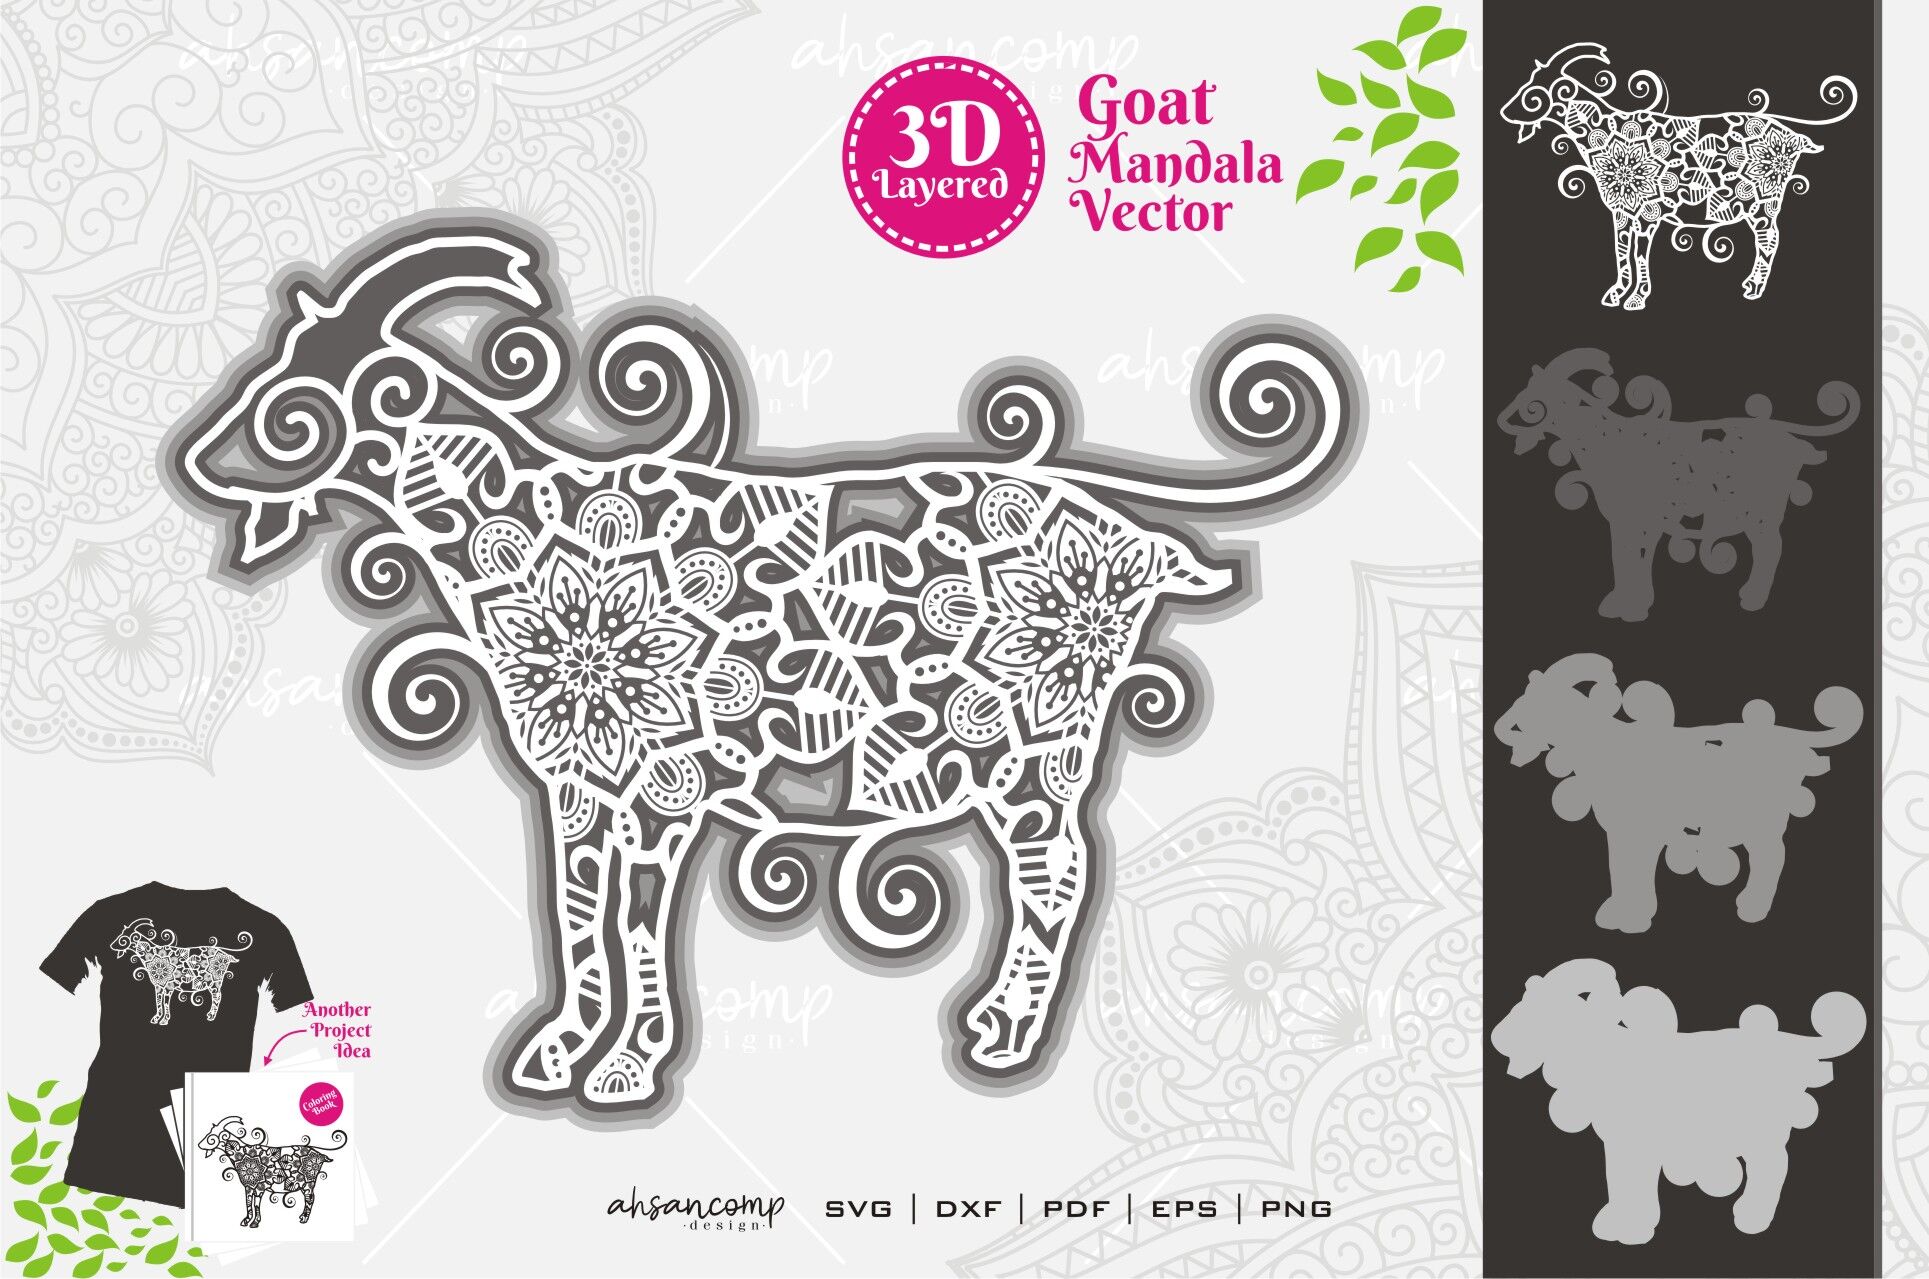 Download Goat Mandala Vector Svg 3d Layered 7 By Ahsancomp Studio Thehungryjpeg Com